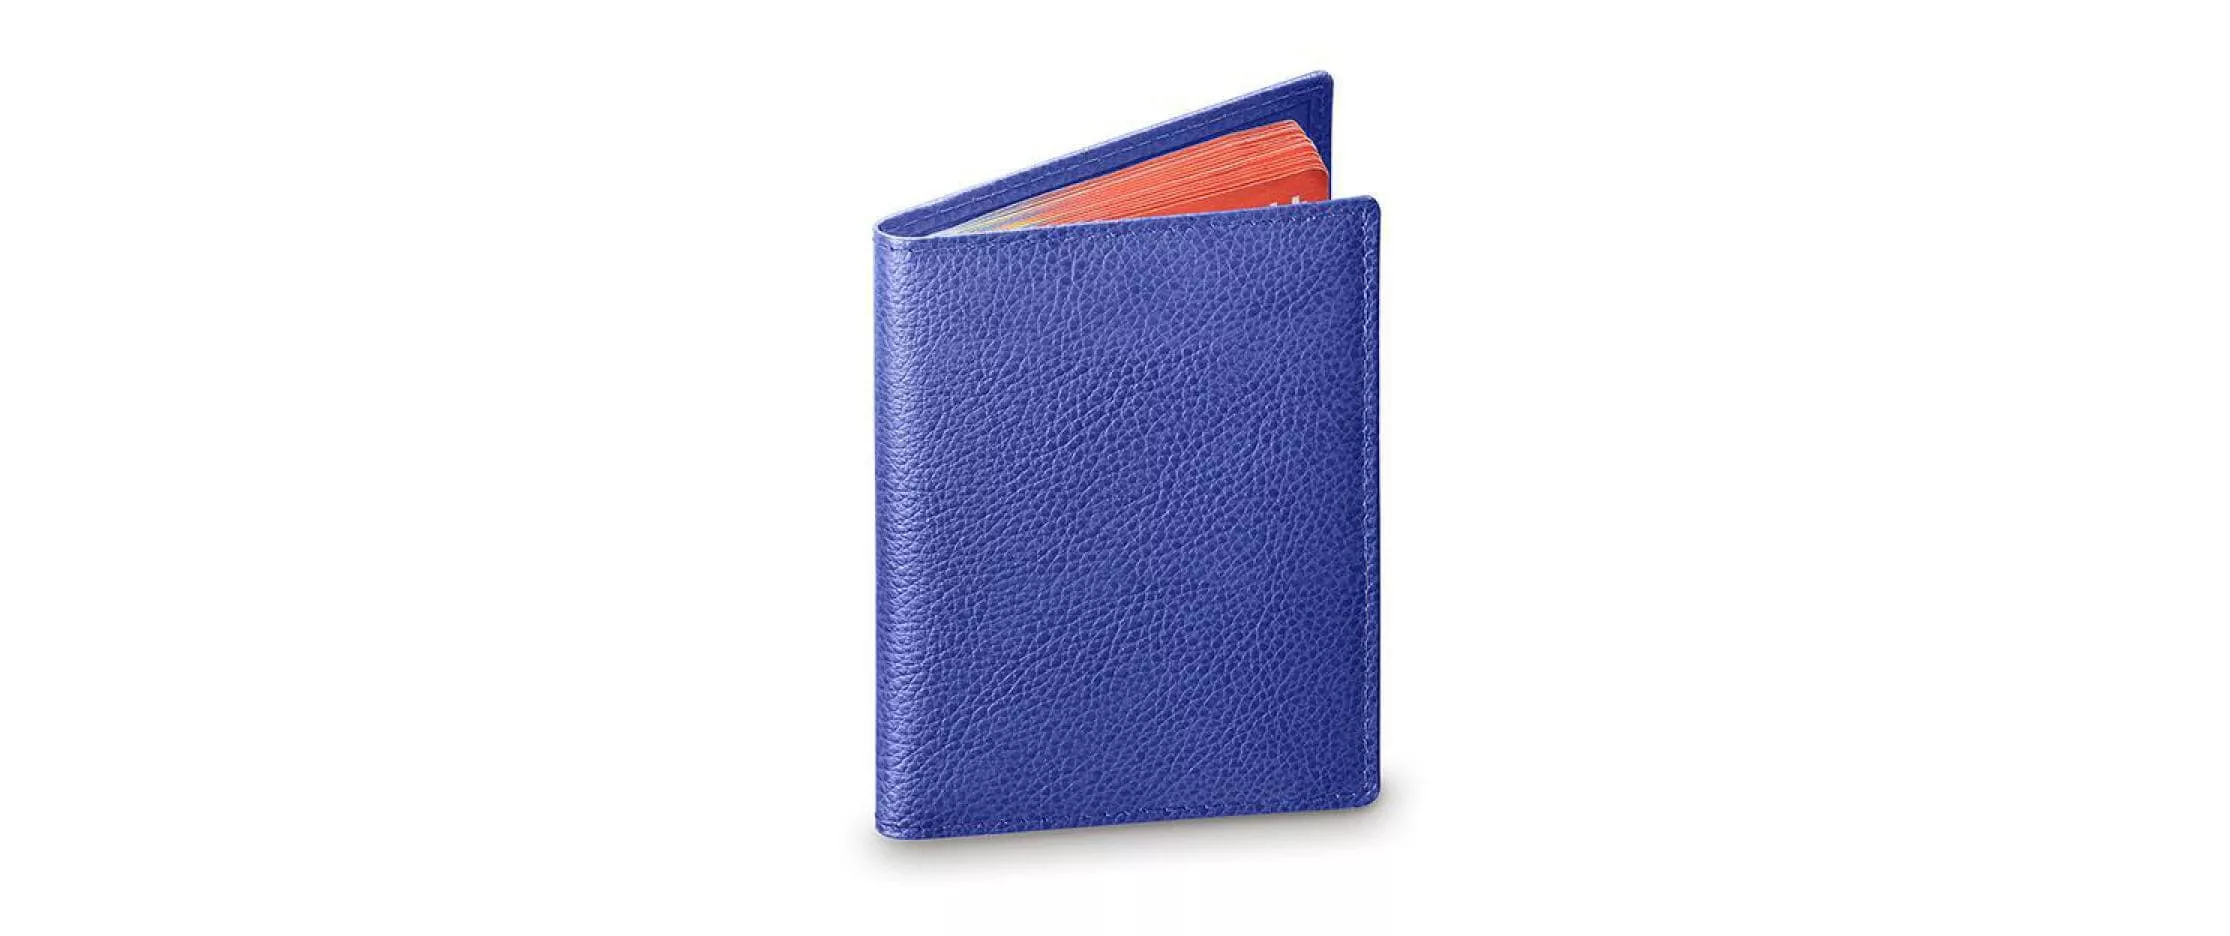 Housse de protection Passport-Safe bleu roi